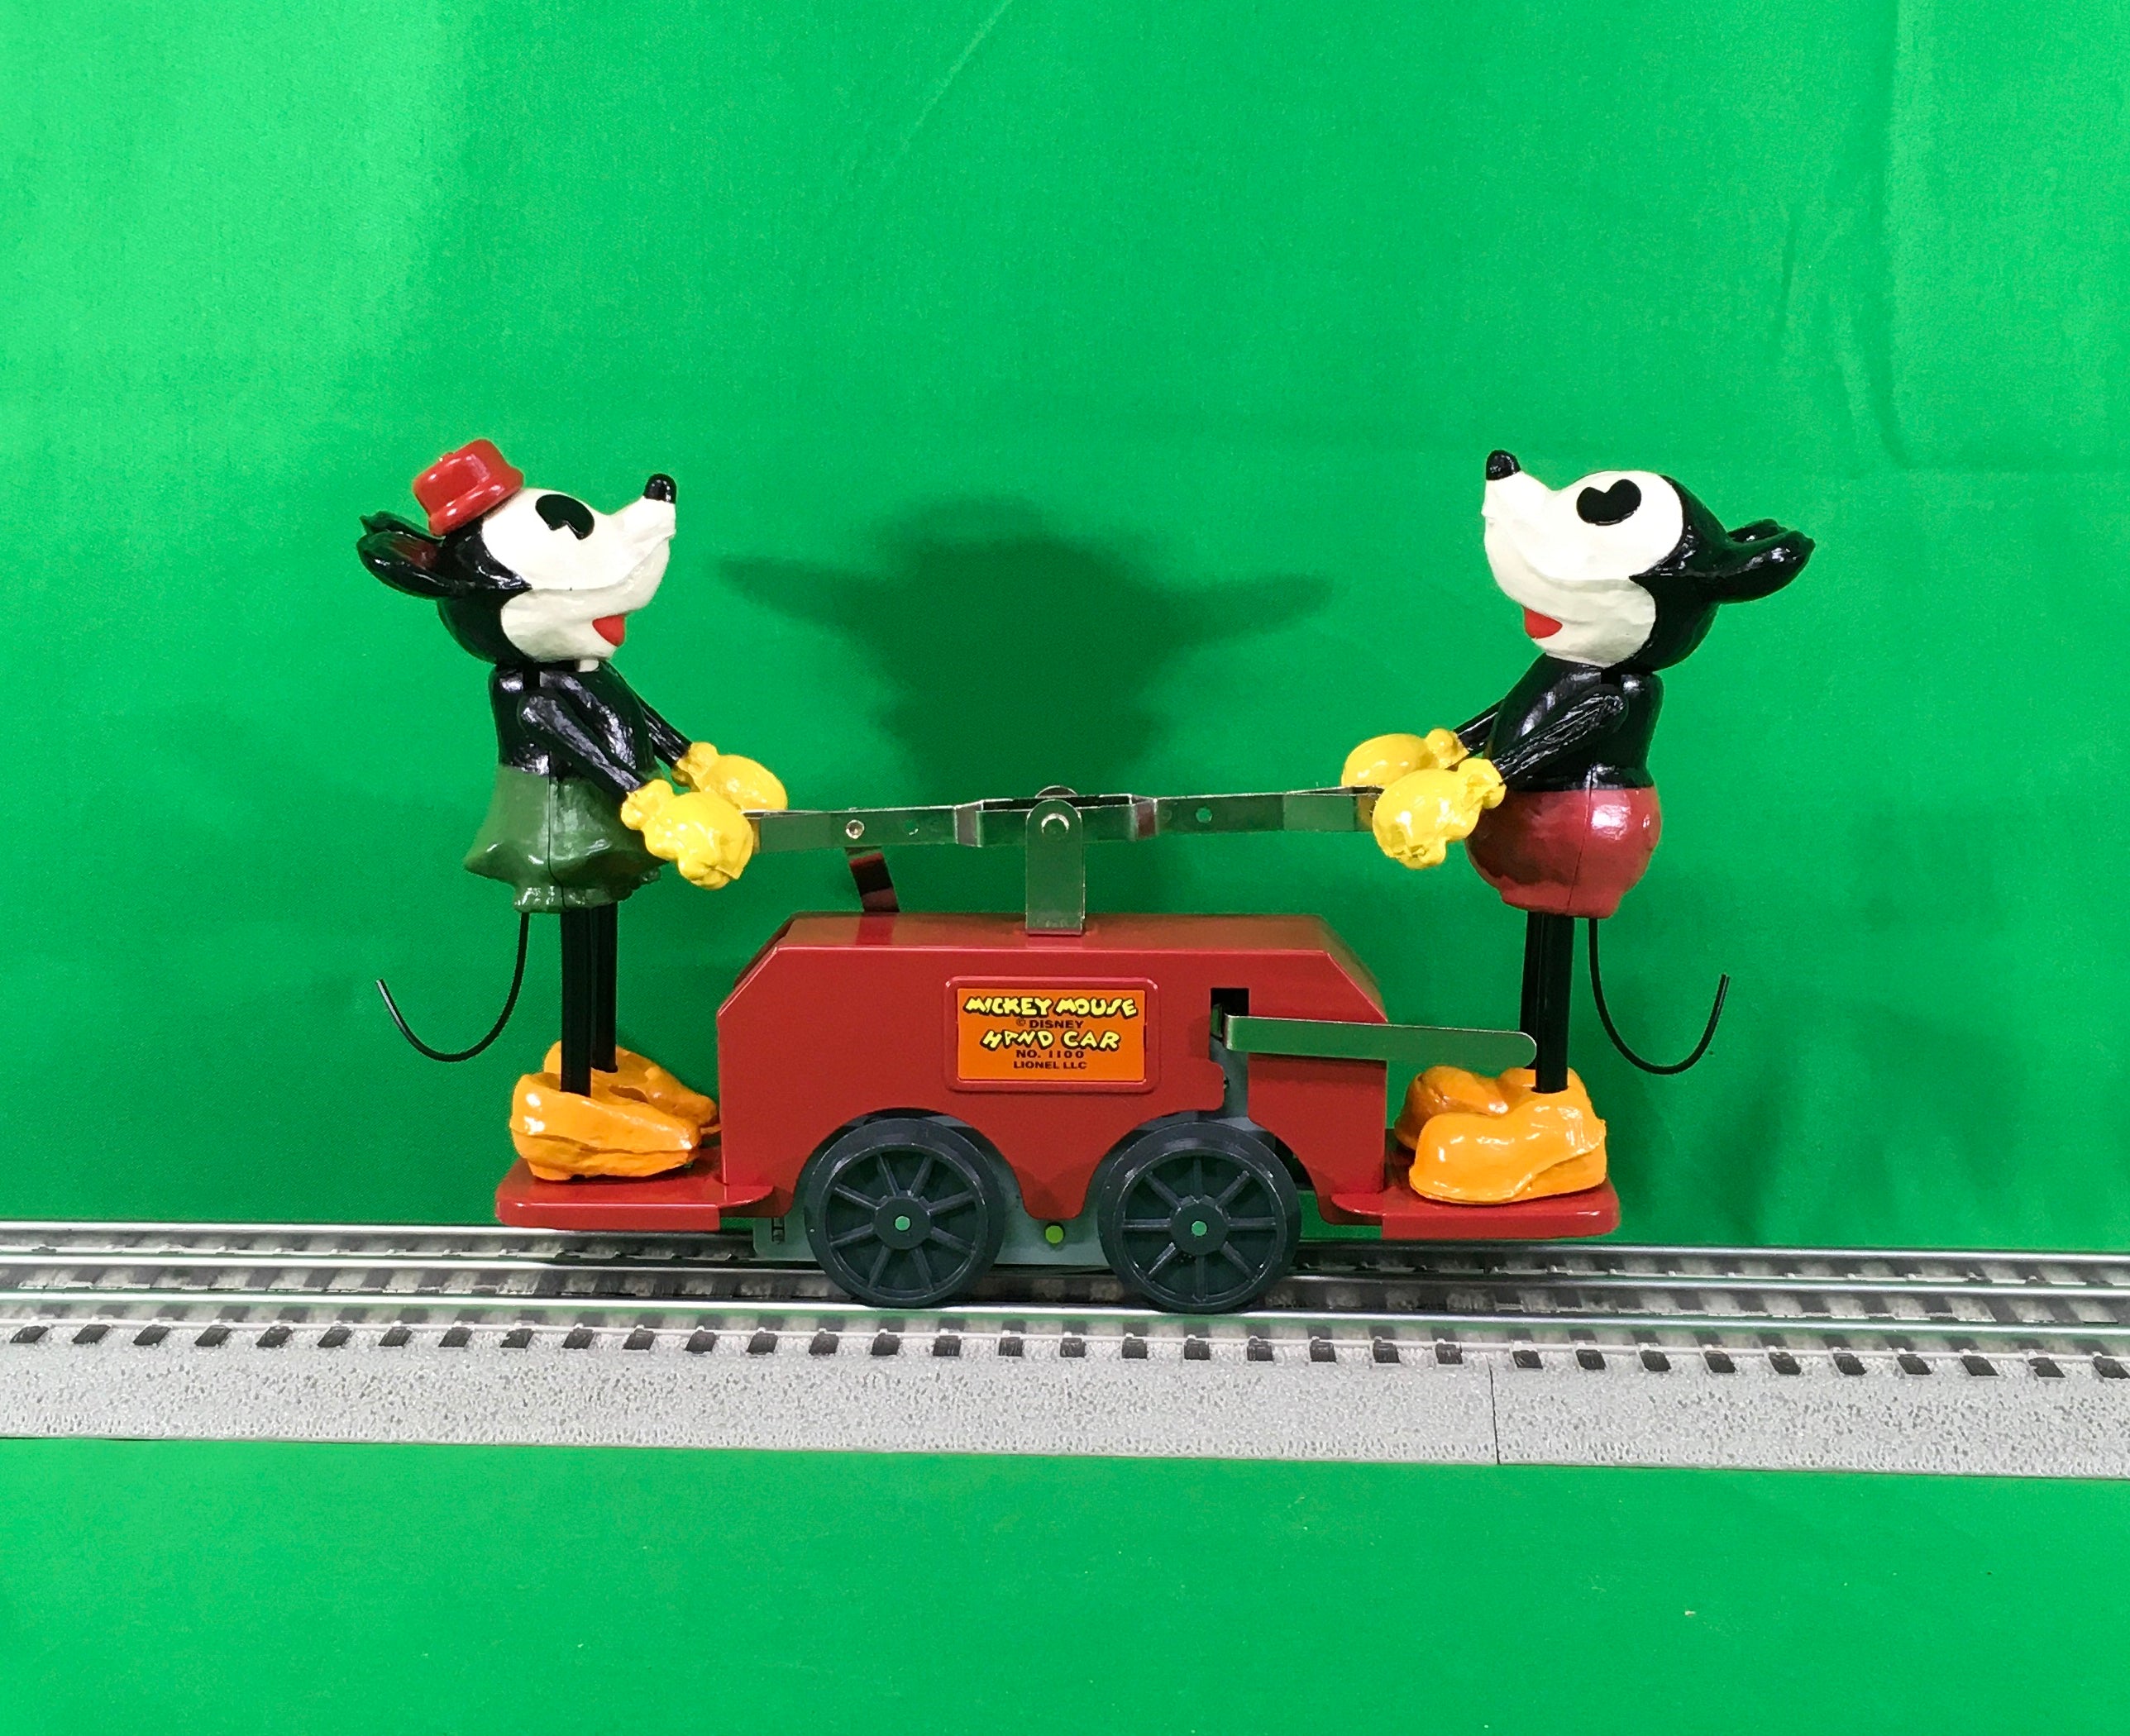 Lionel 2335190 - Disney - Mickey and Minnie Handcar